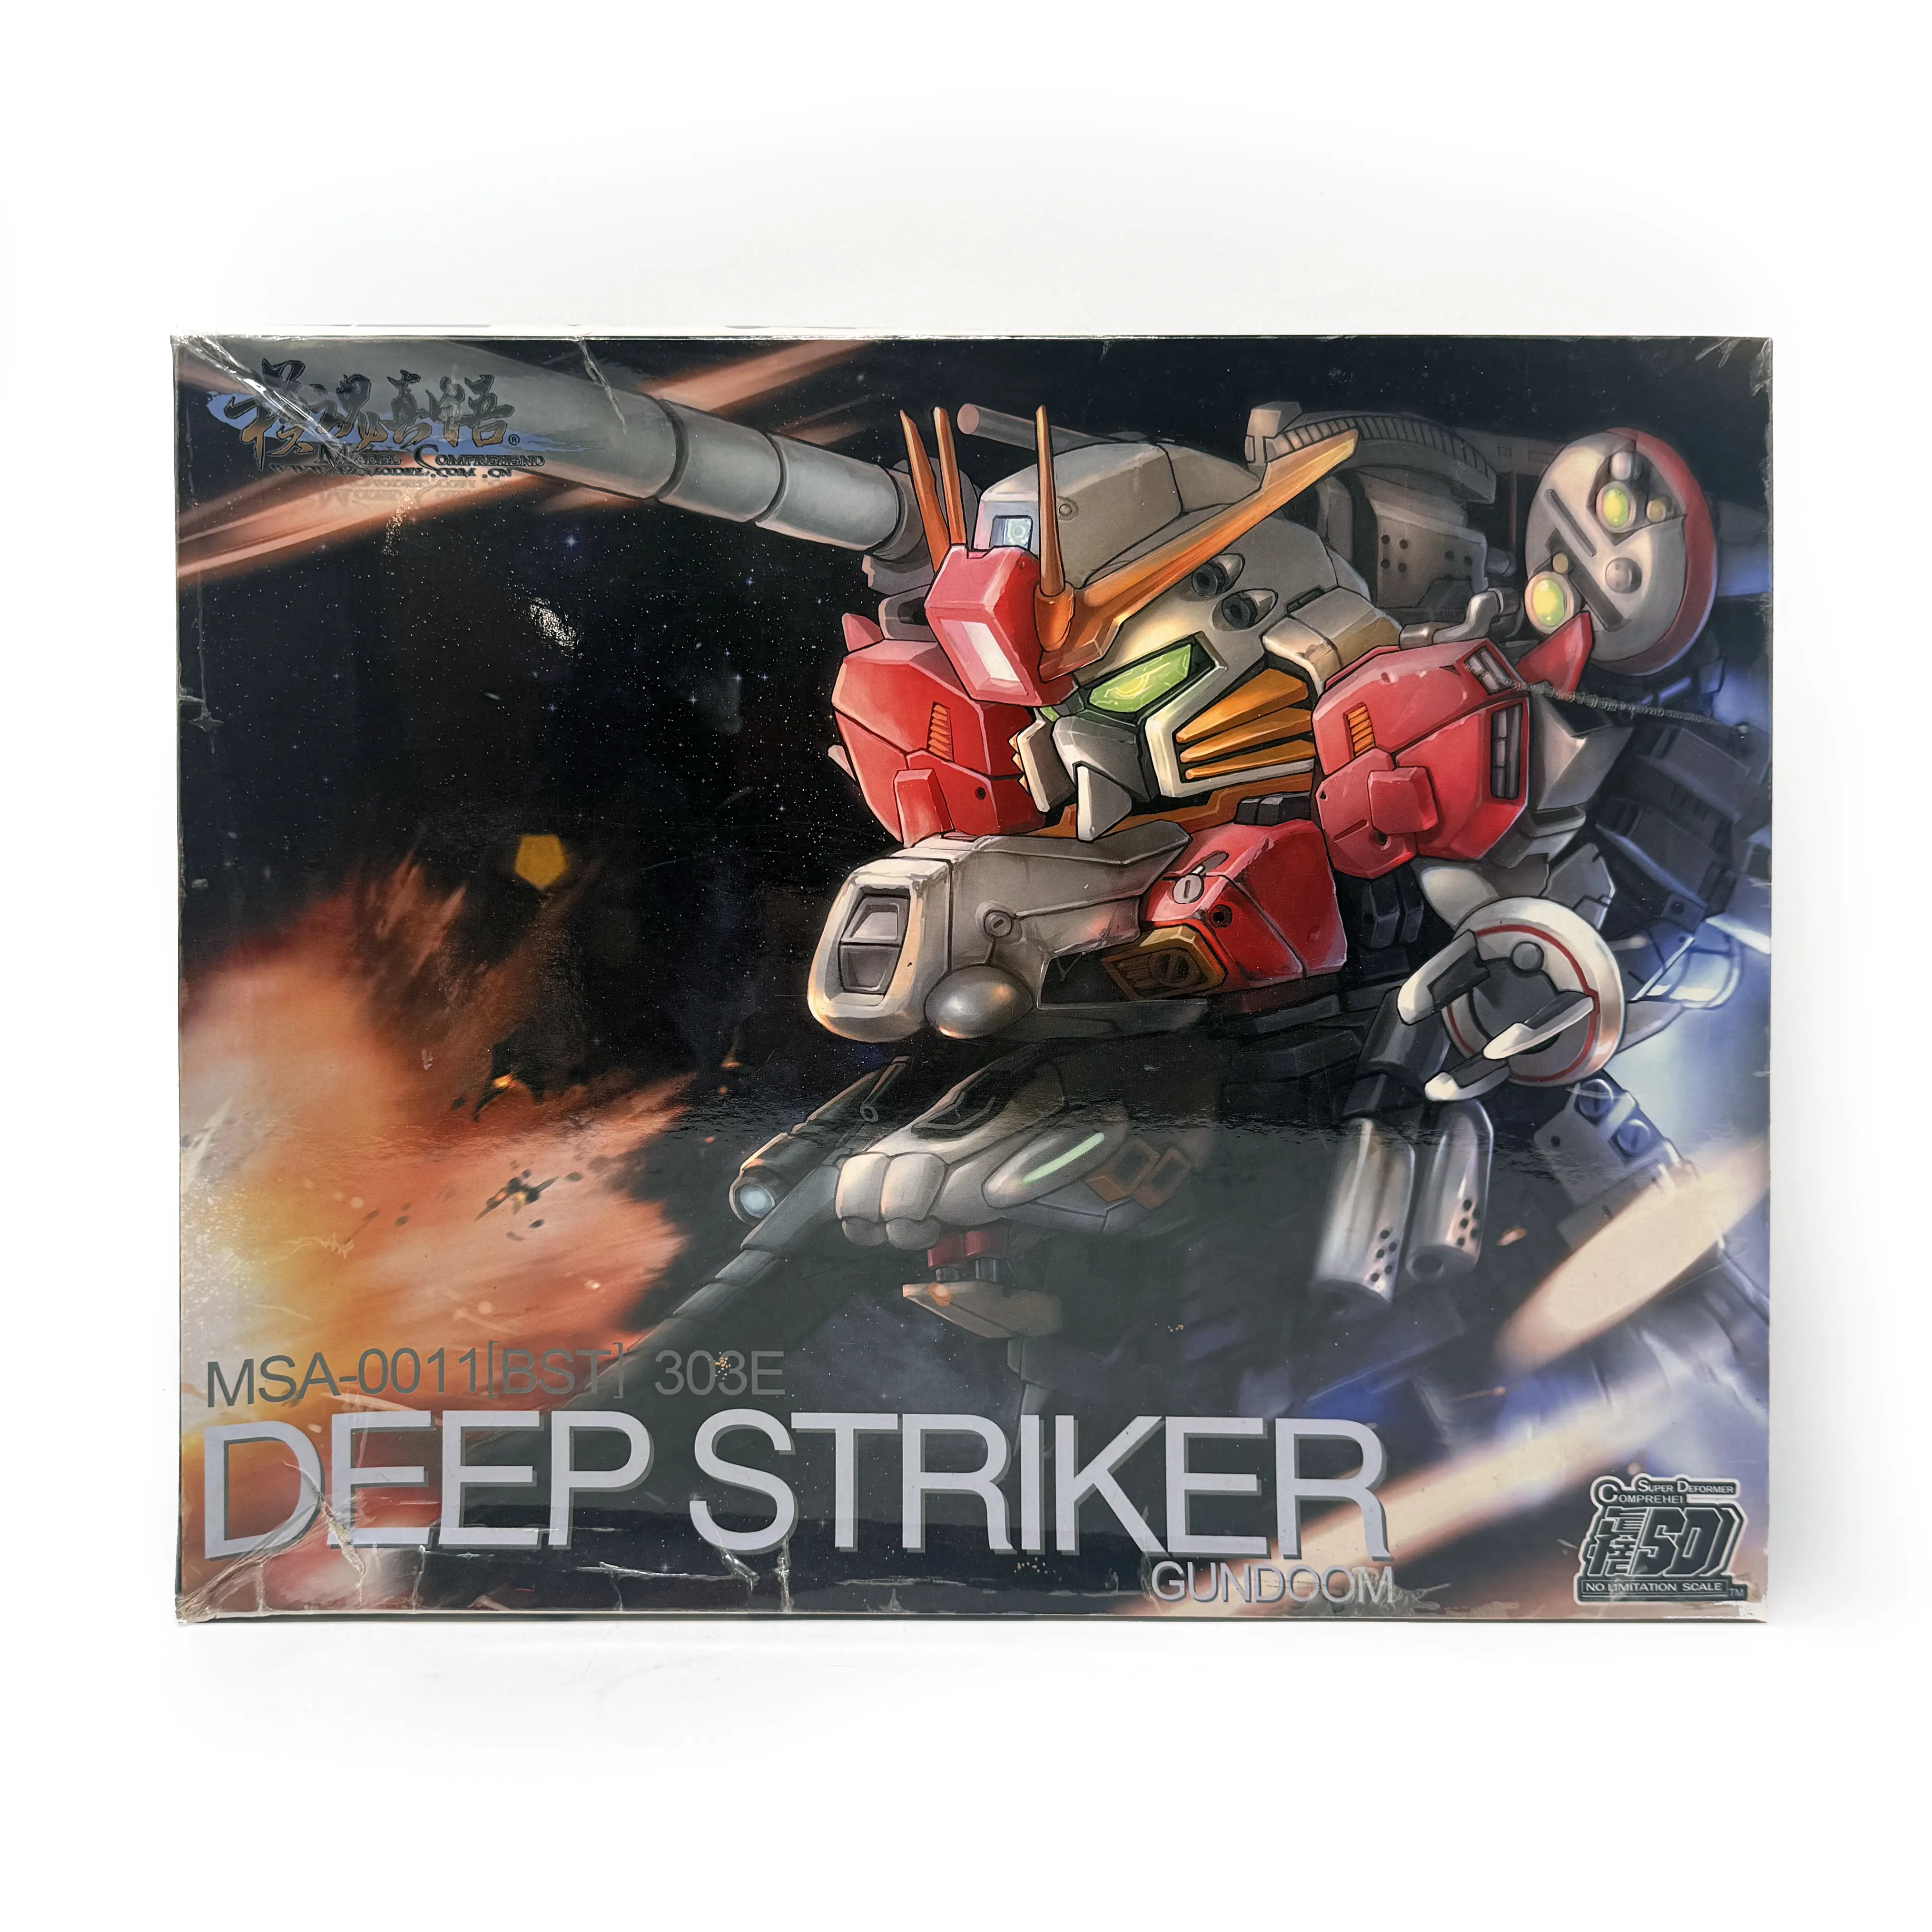 Gundam SD Deep Striker 3rd Party Gundoom Cool mc model